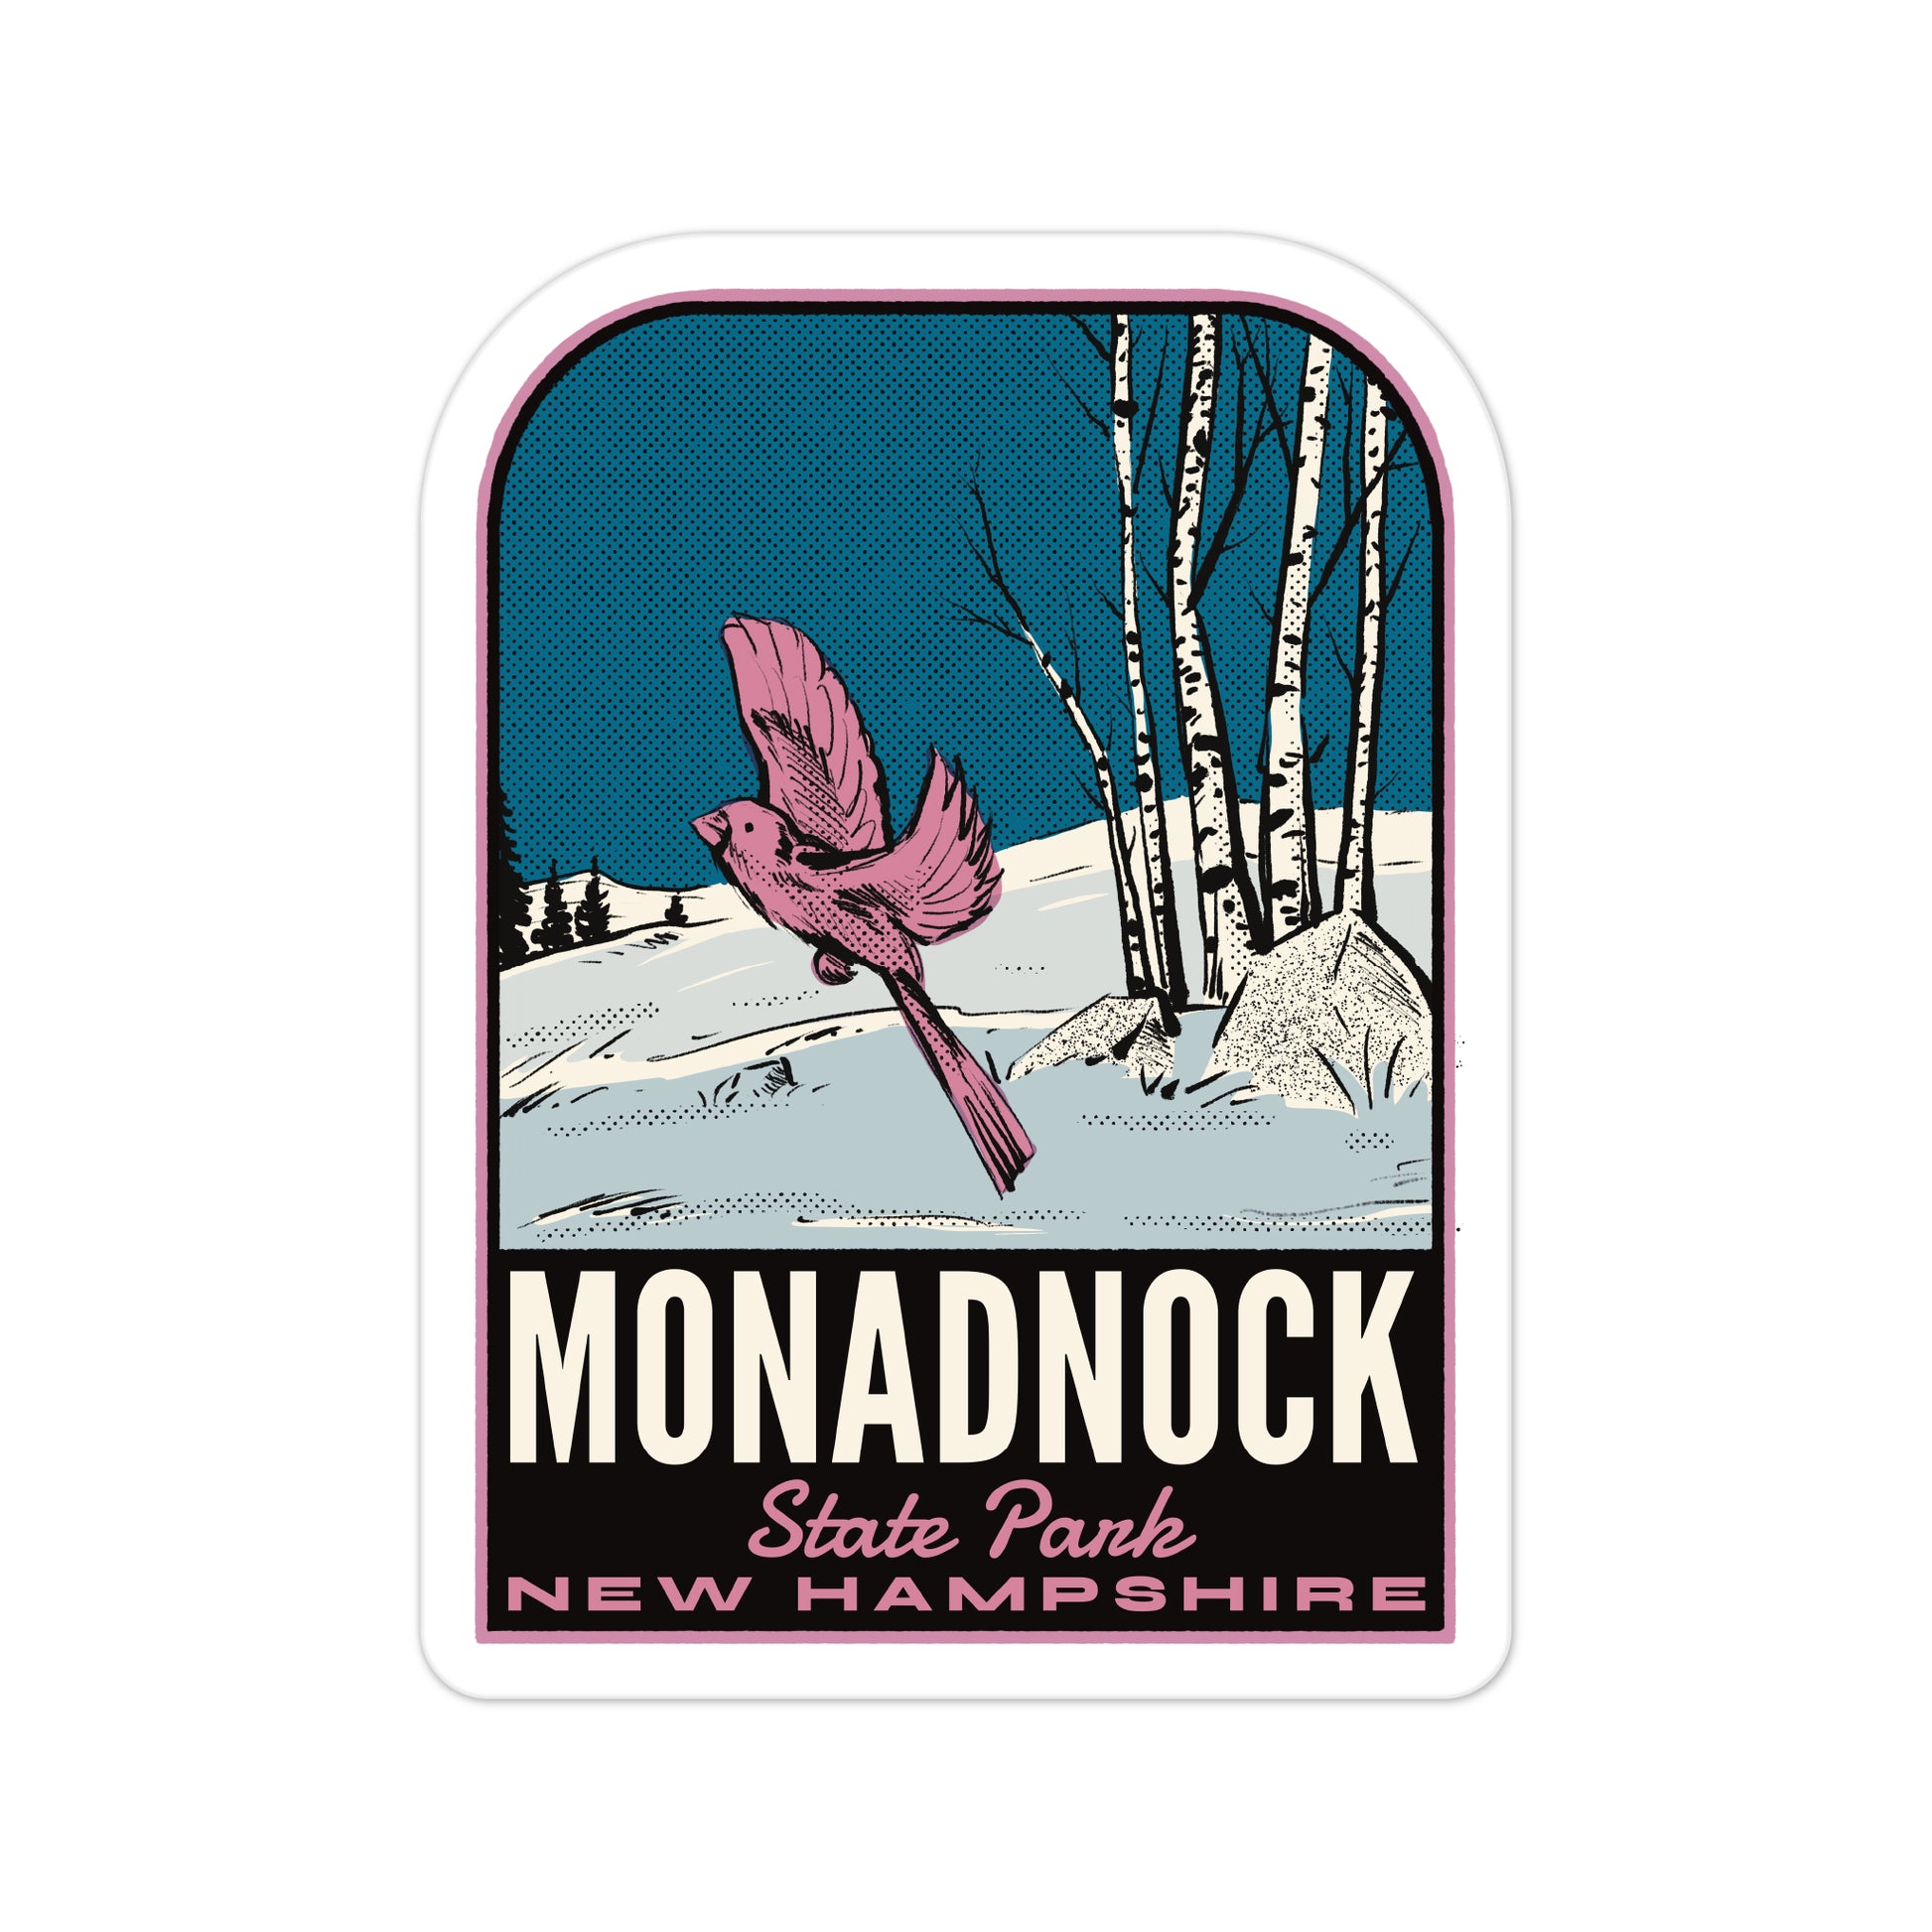 A sticker of Monadnock State Park